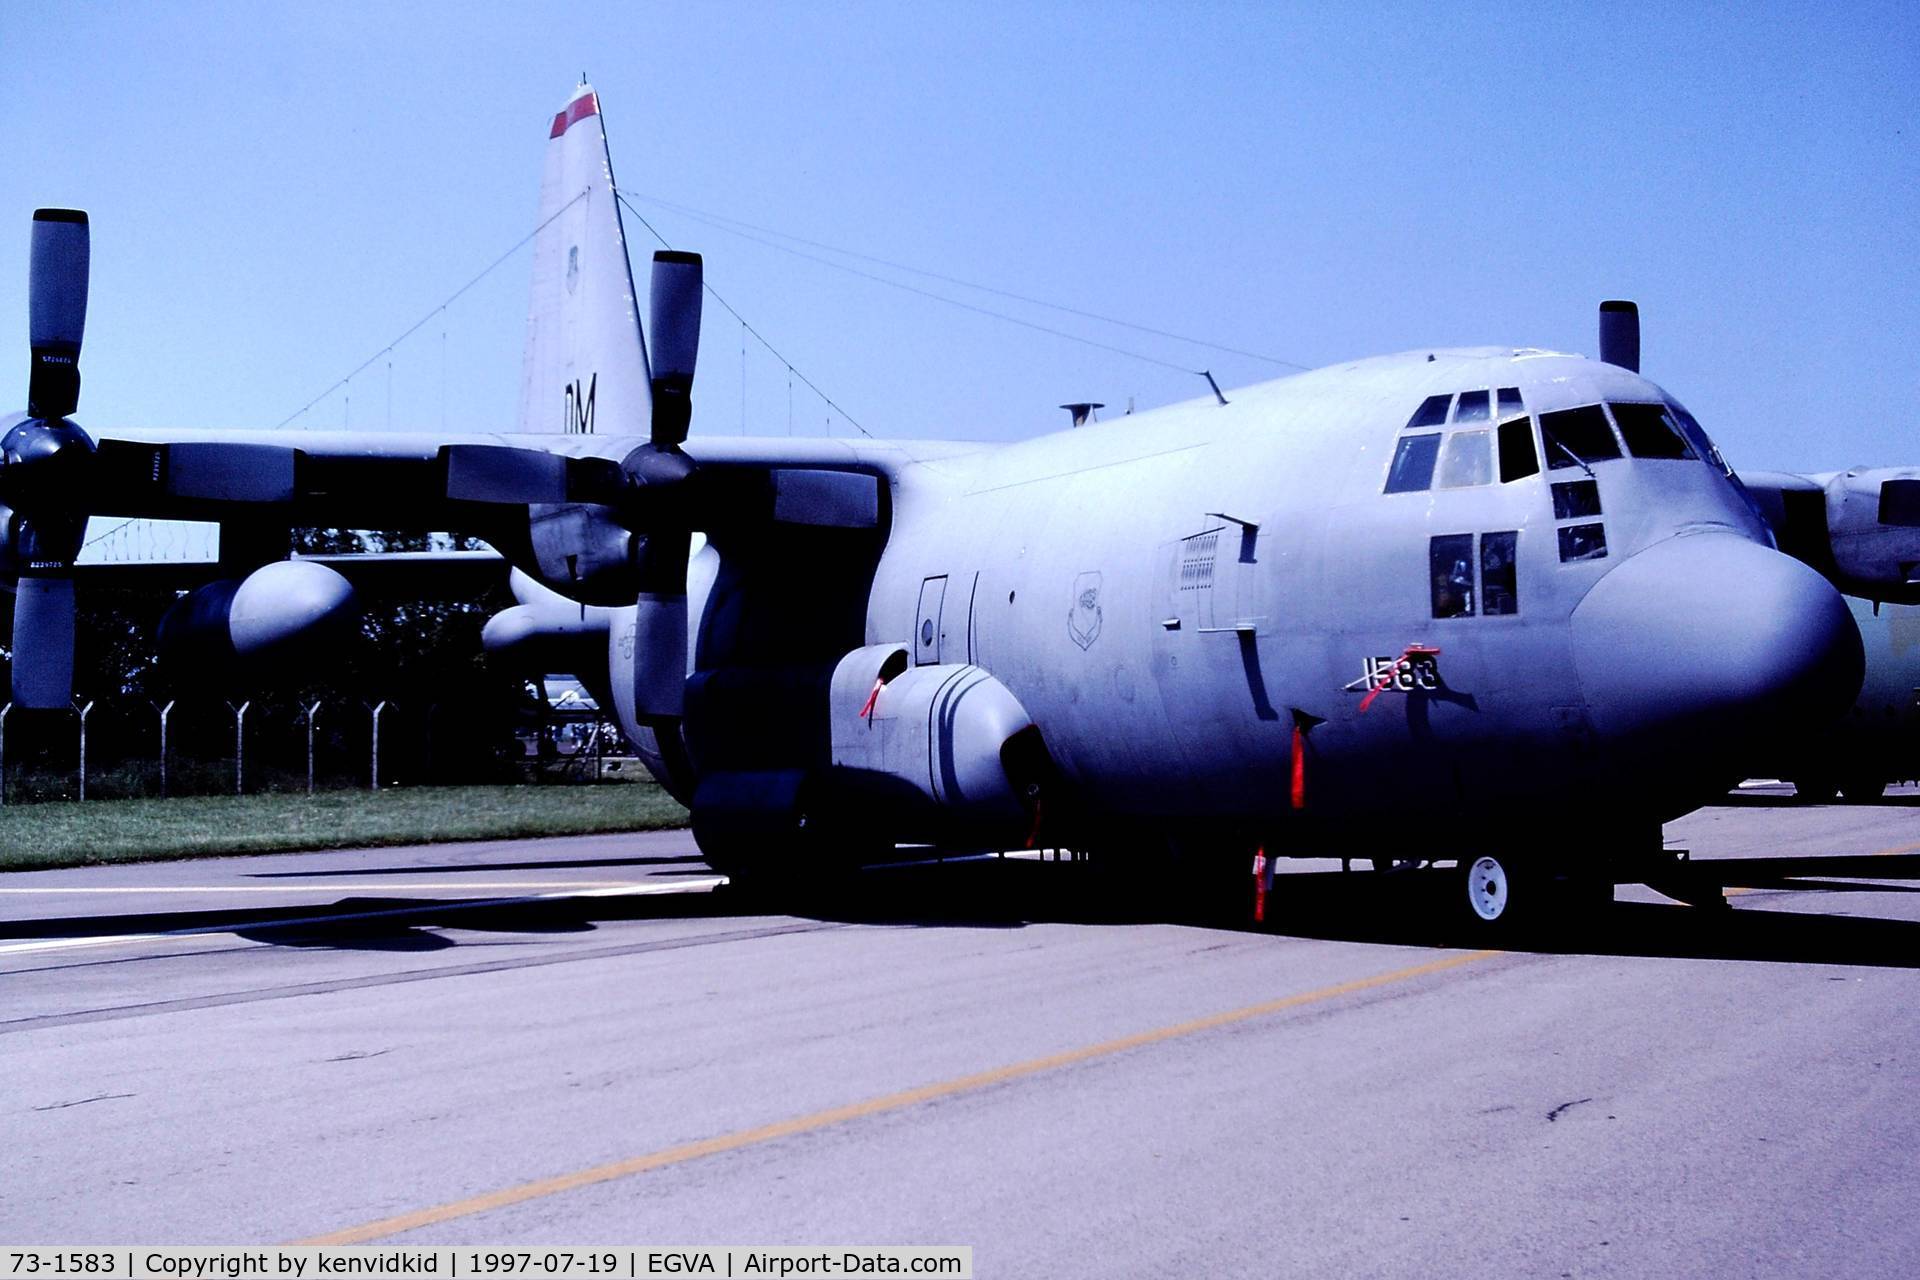 73-1583, 1973 Lockheed EC-130H Compass Call C/N 382-4545, At the 1997 Royal International Air Tattoo.